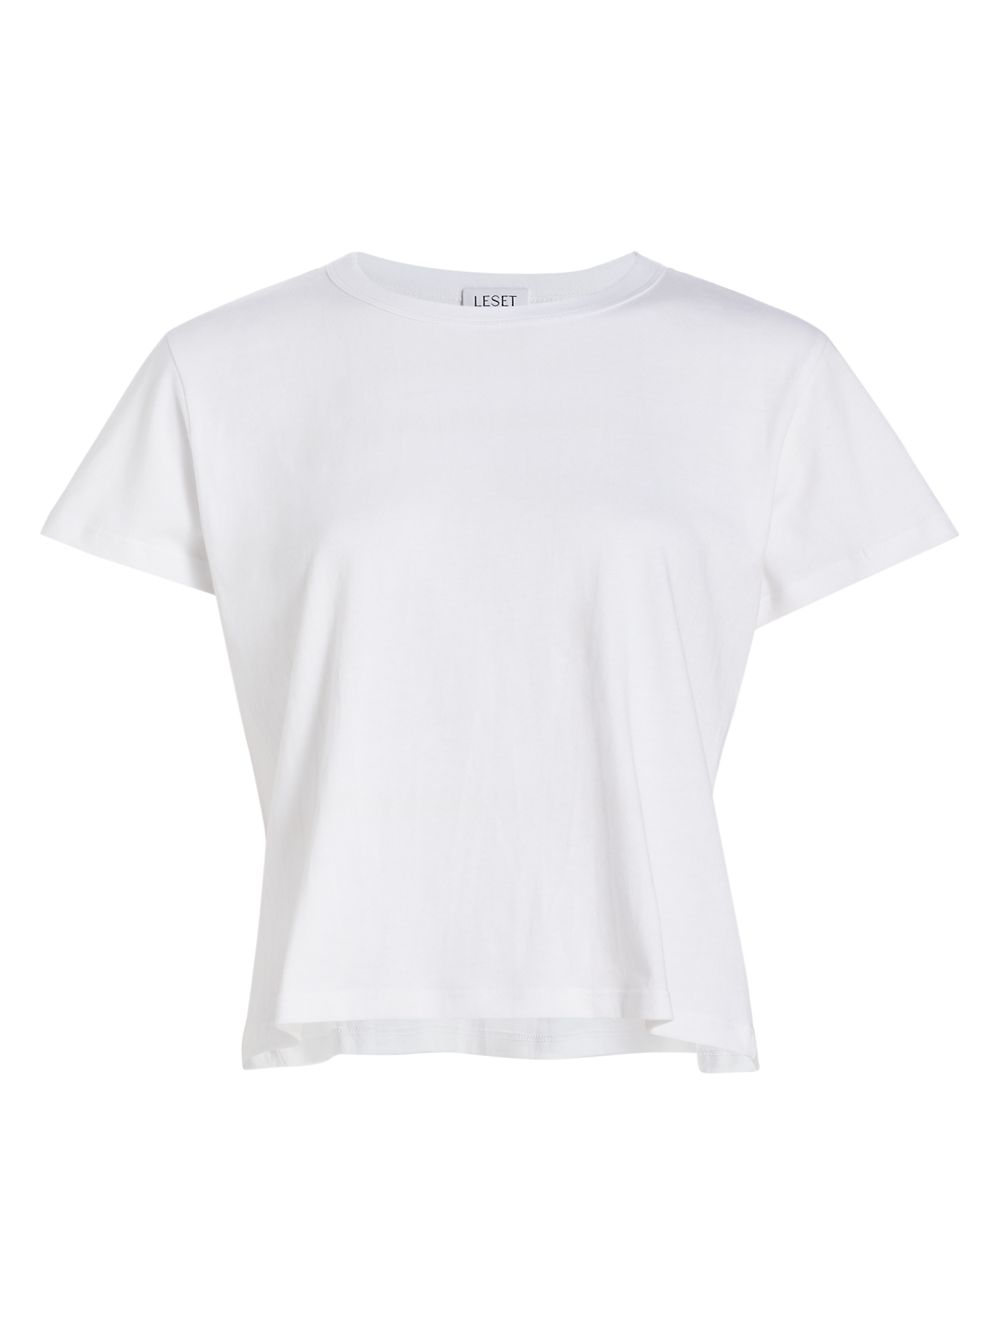 Хлопковая укороченная футболка Margo Leset, белый